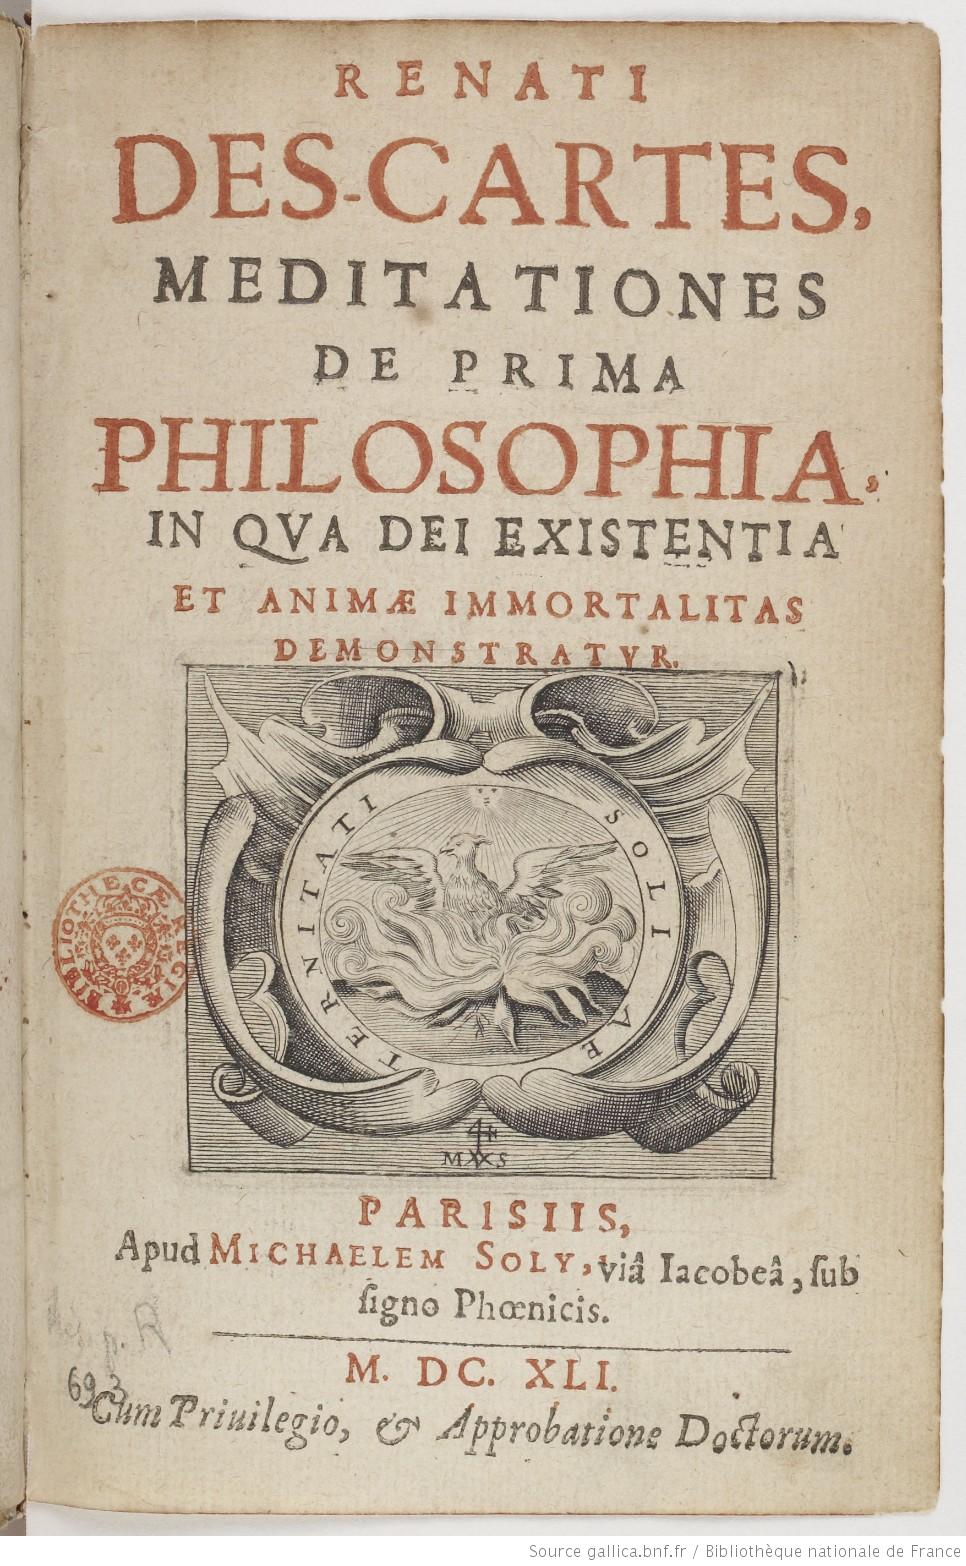 Original title page for the first Latin edition (1641) of the Meditationes de prima philosophiaby René Descartes